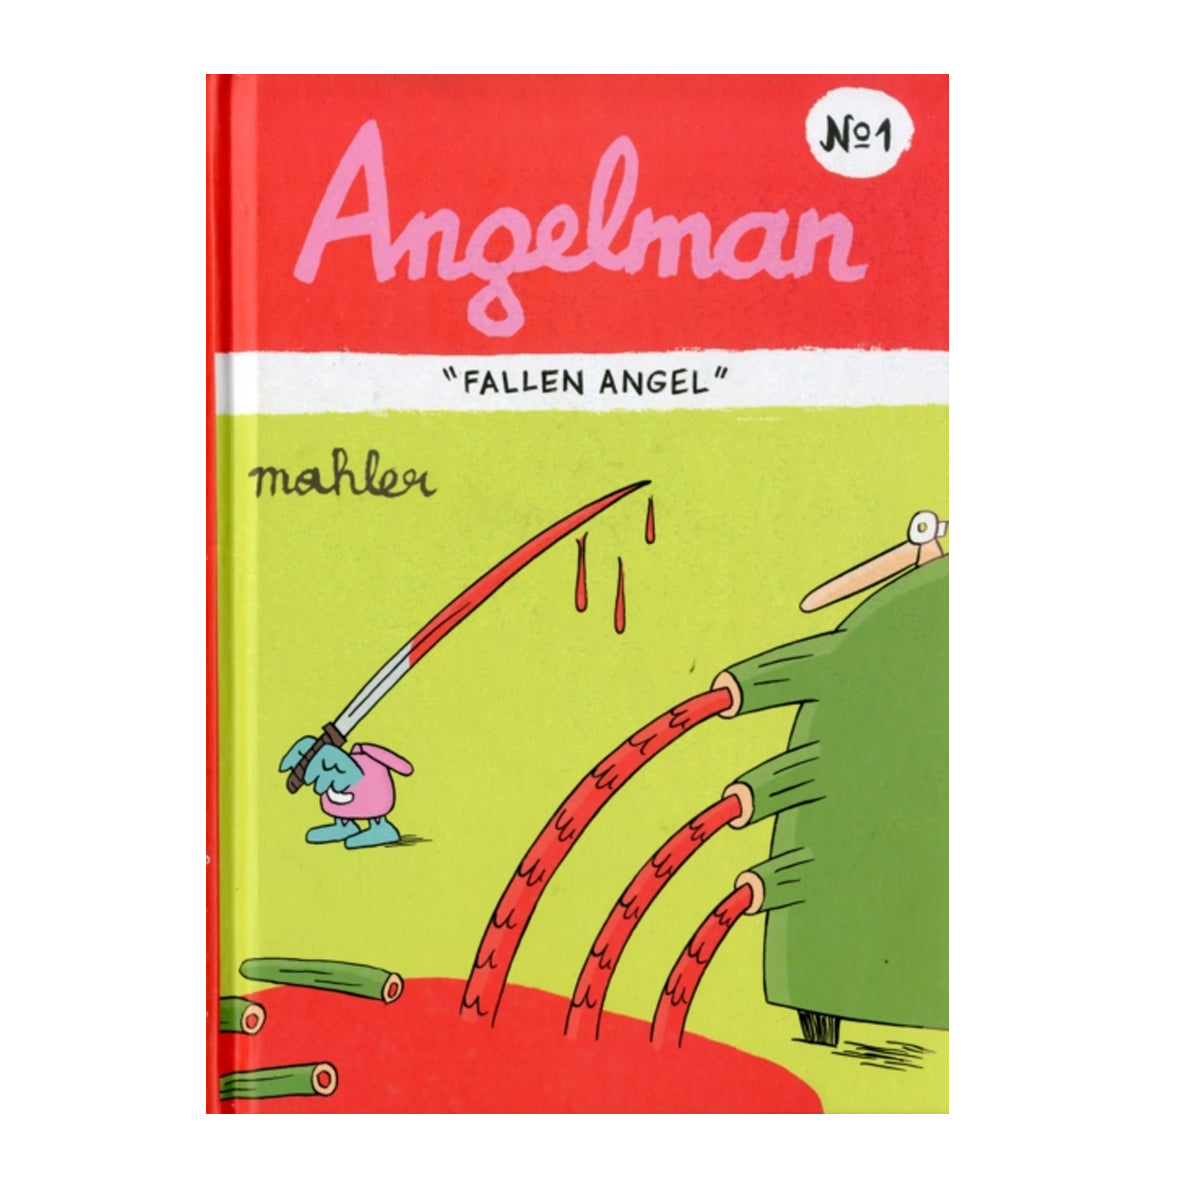 Book - Angelman Fallen Angel